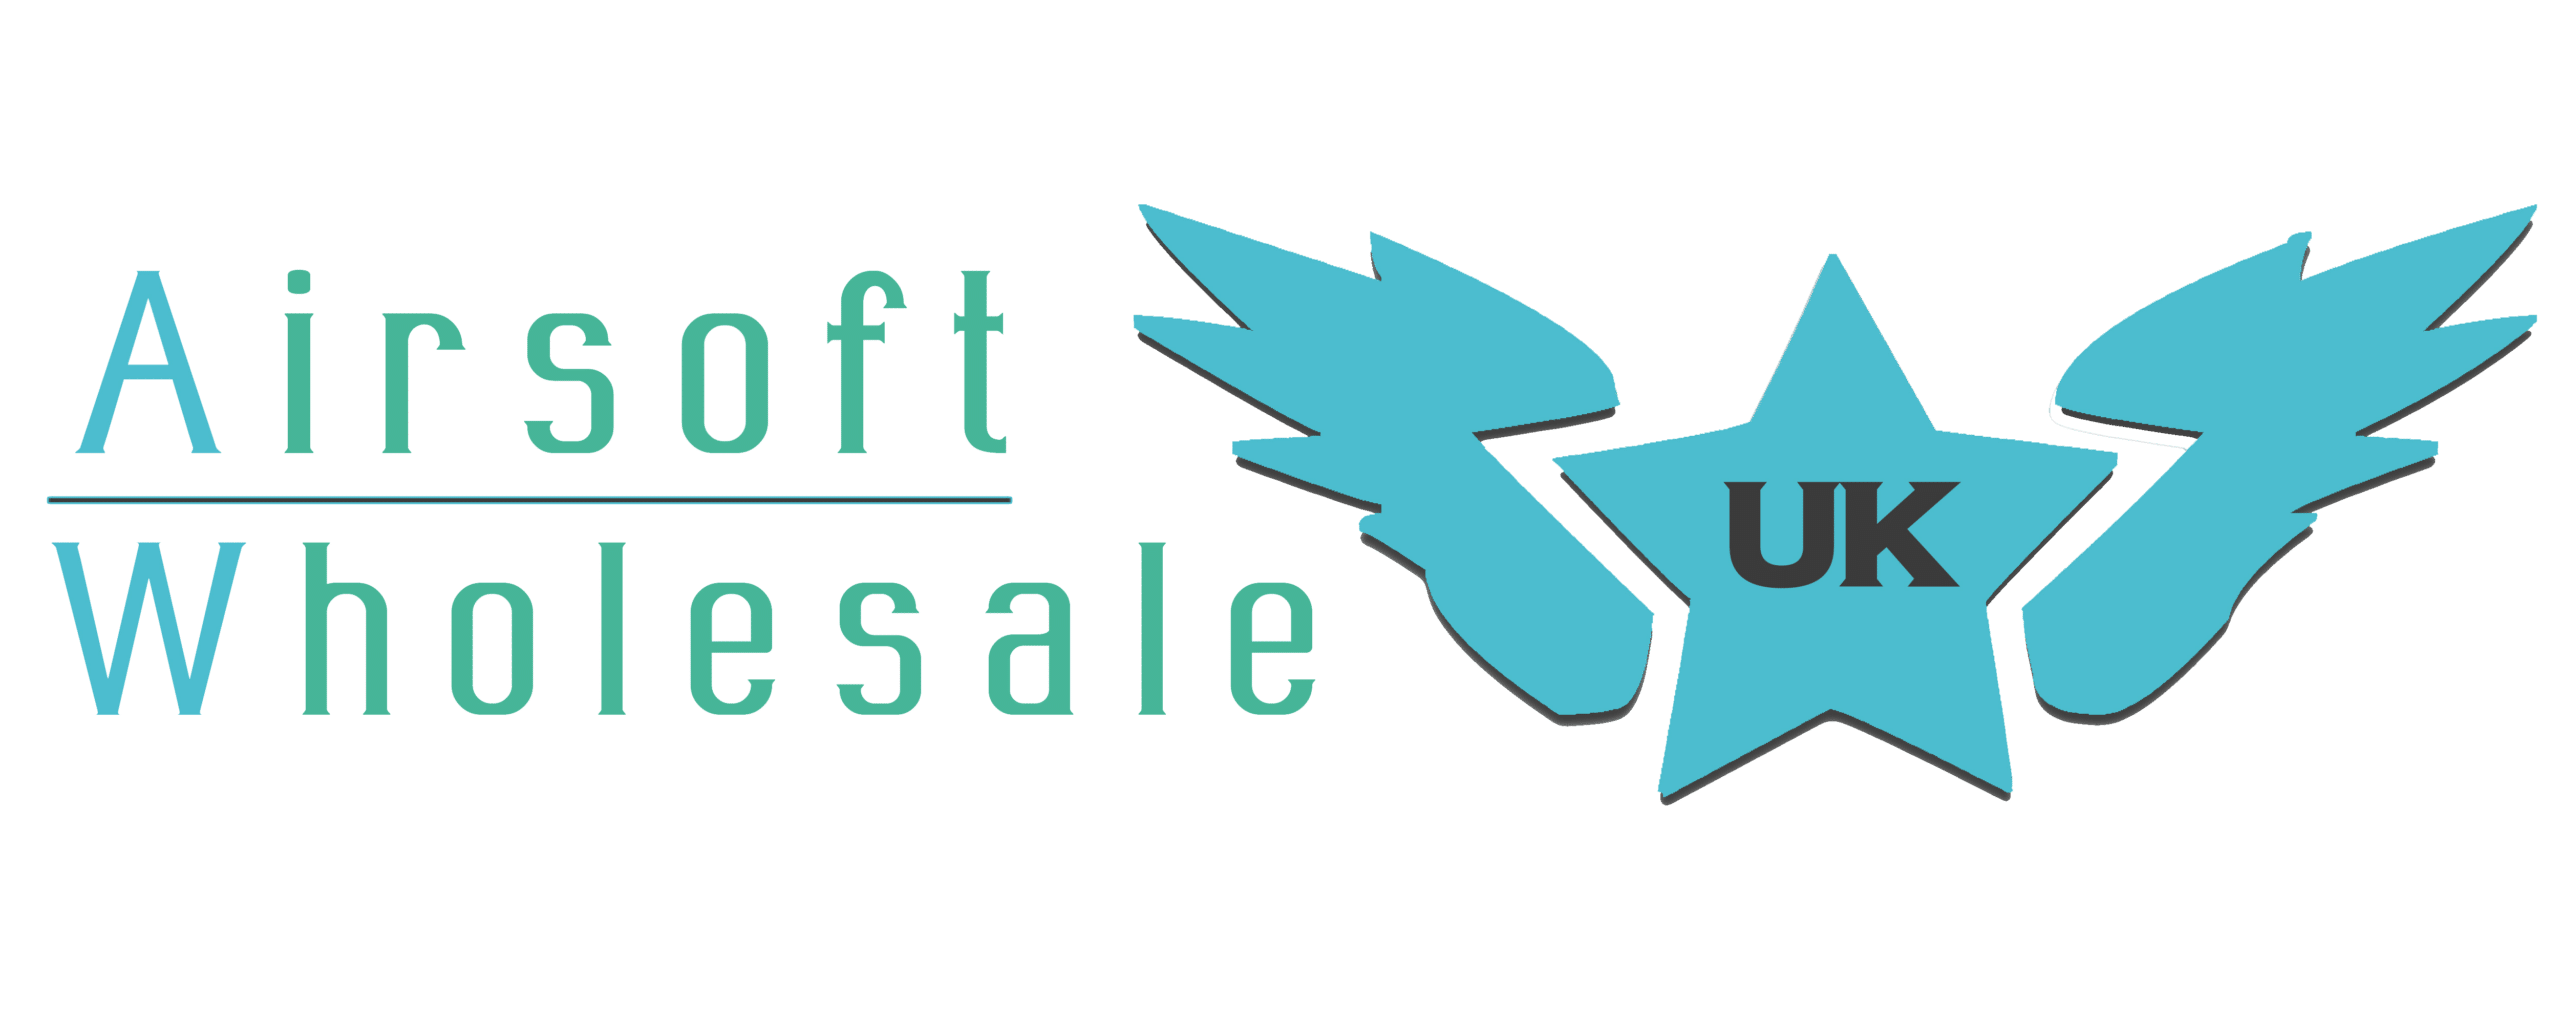 Airsoft Wholesale UK